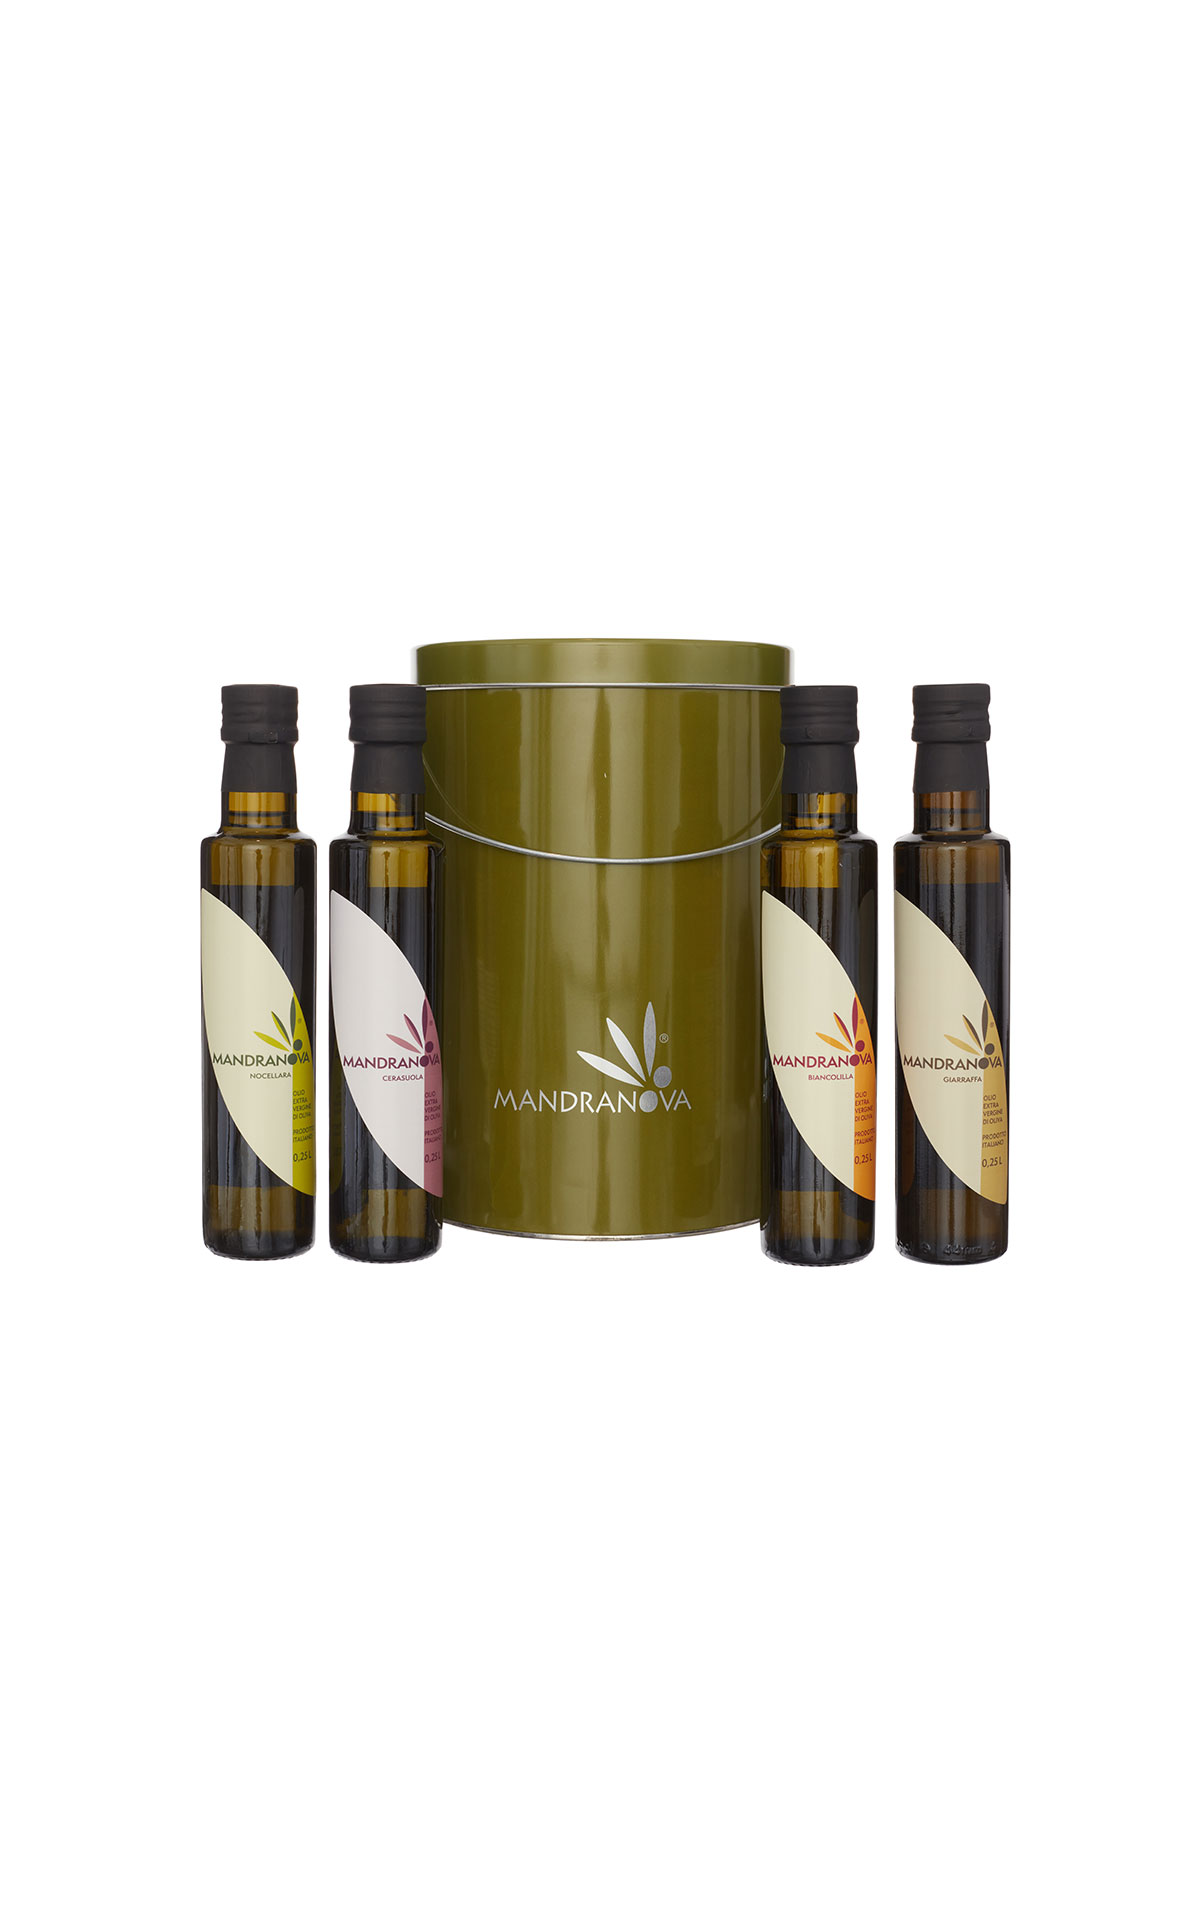 LA TUA Mandranova 4 bottles of monocultivar olive oils in a gift tin from Bicester Village